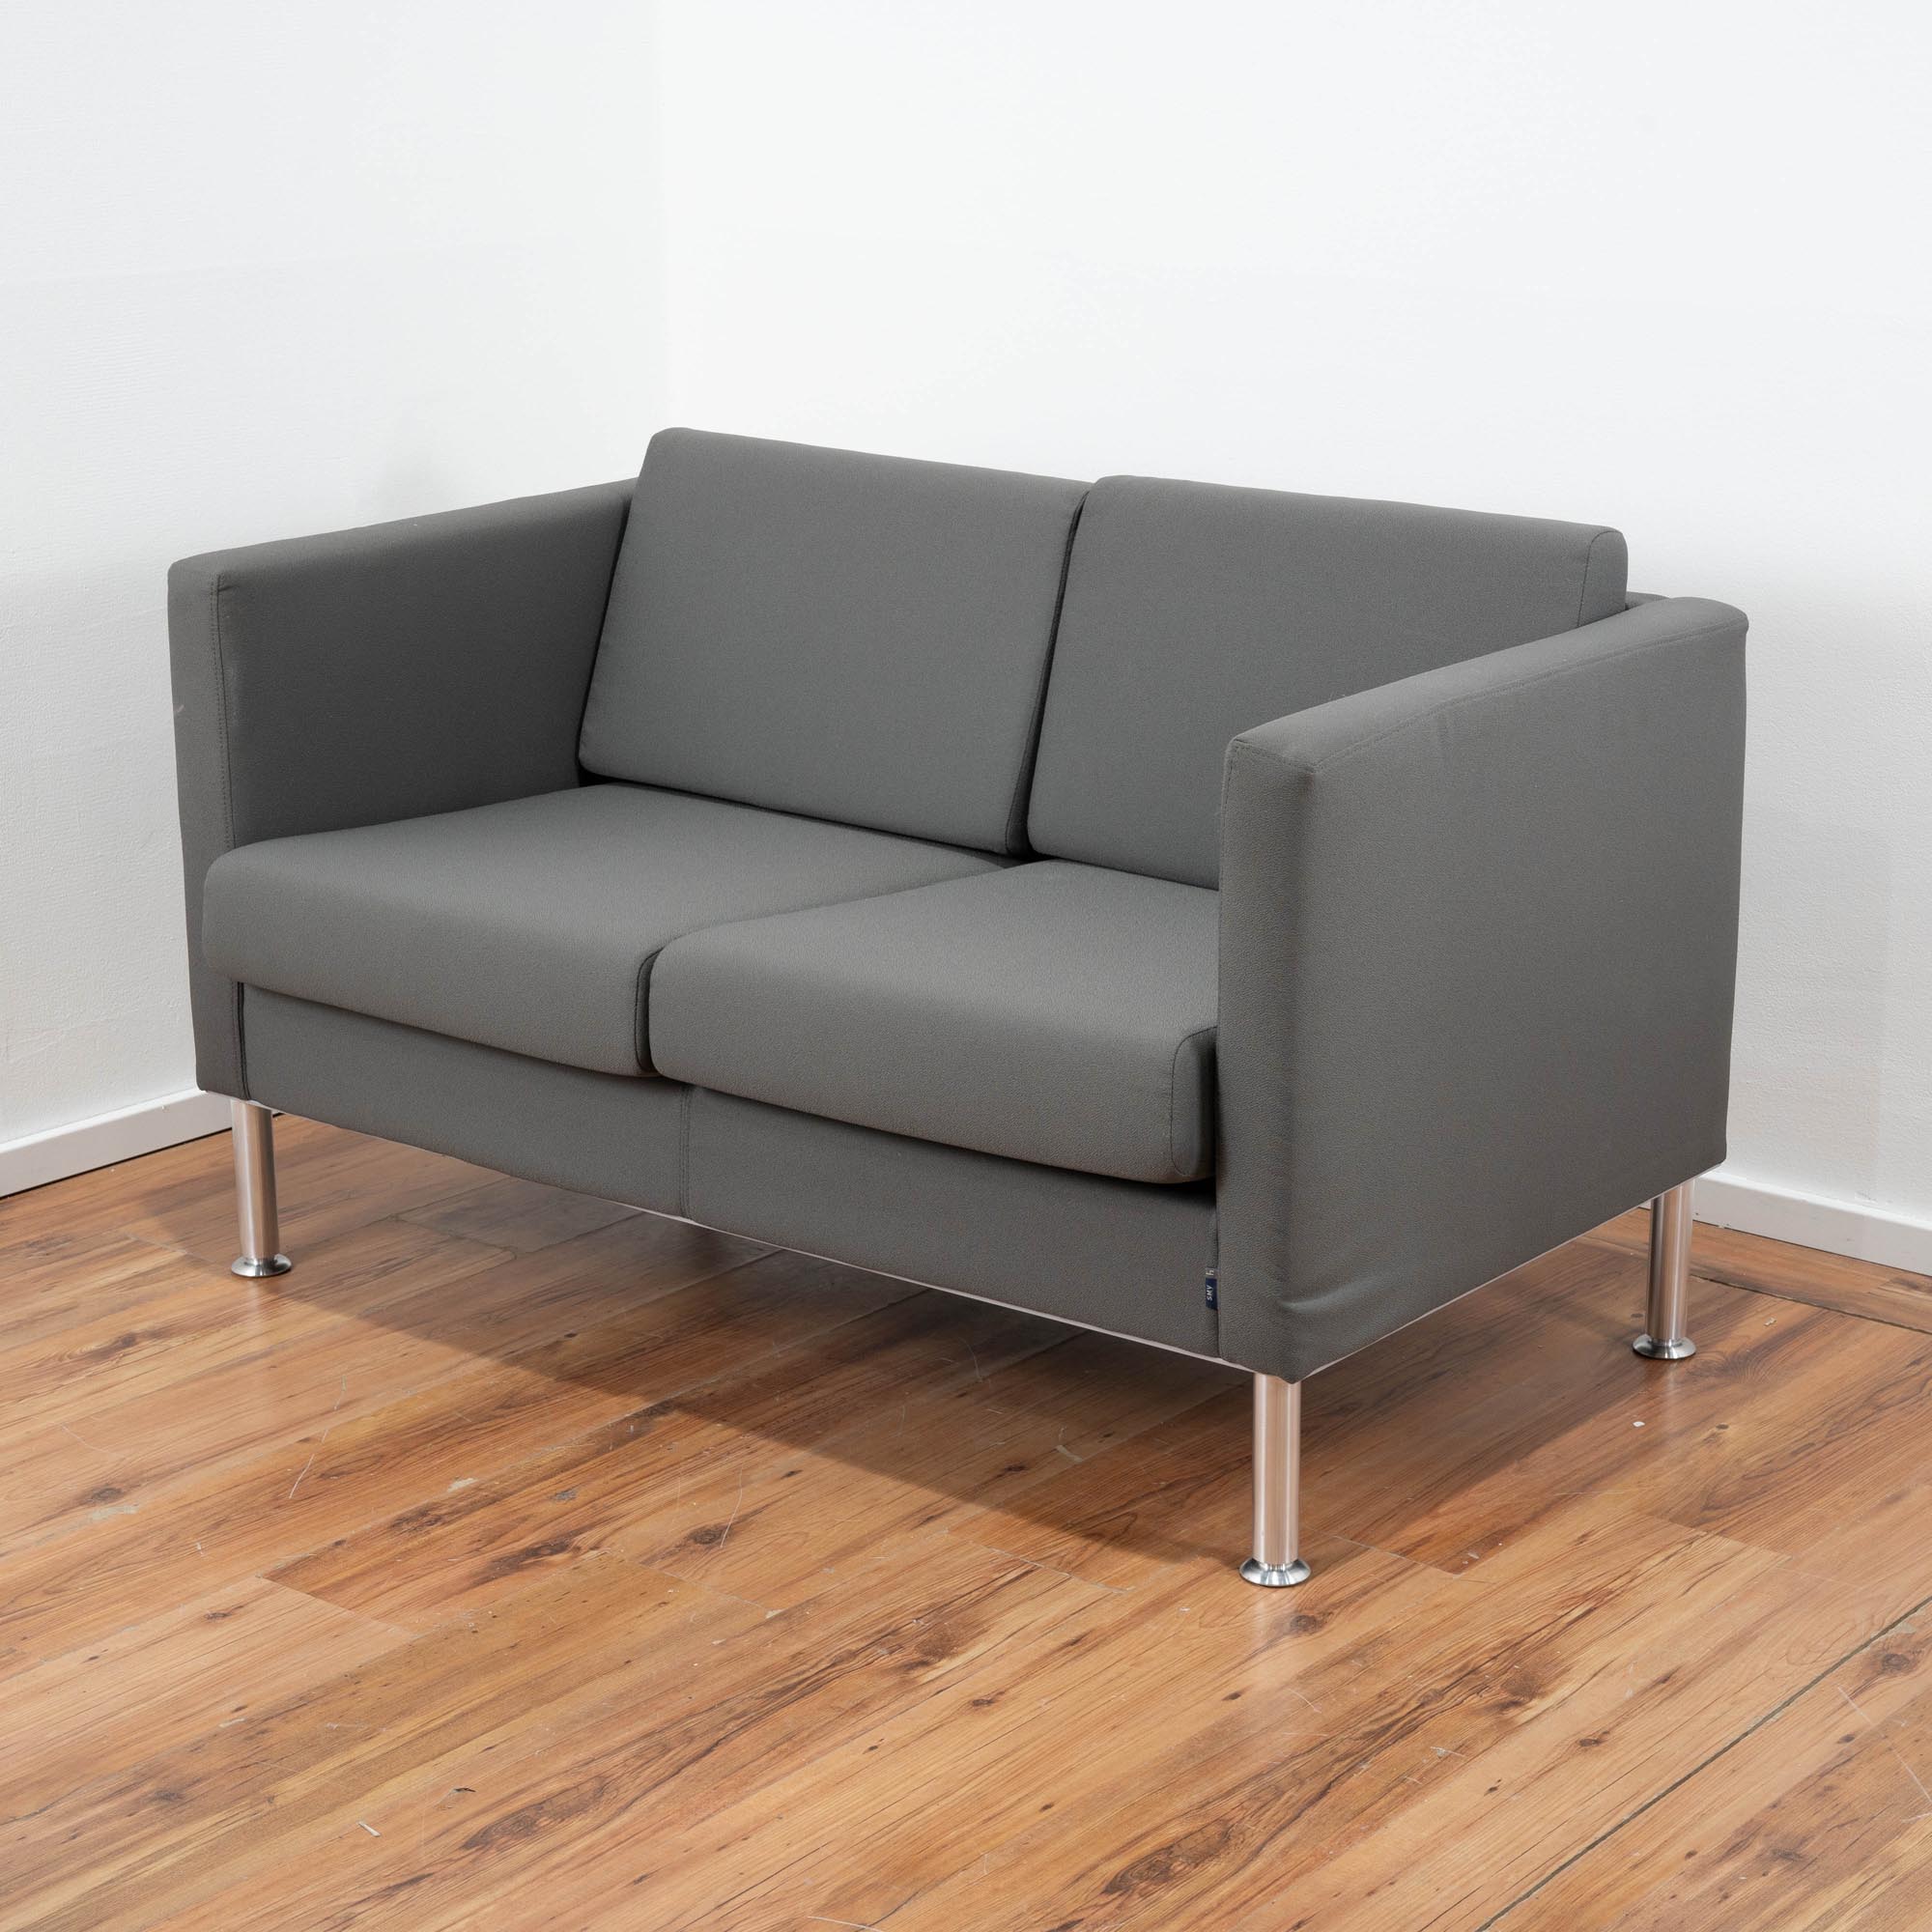 SMV 2-Sitzer Sofa - Stoff grau - 4-Fußgestell Chrom - Maße: 130 x 76 x 76 cm (B/H/T) 